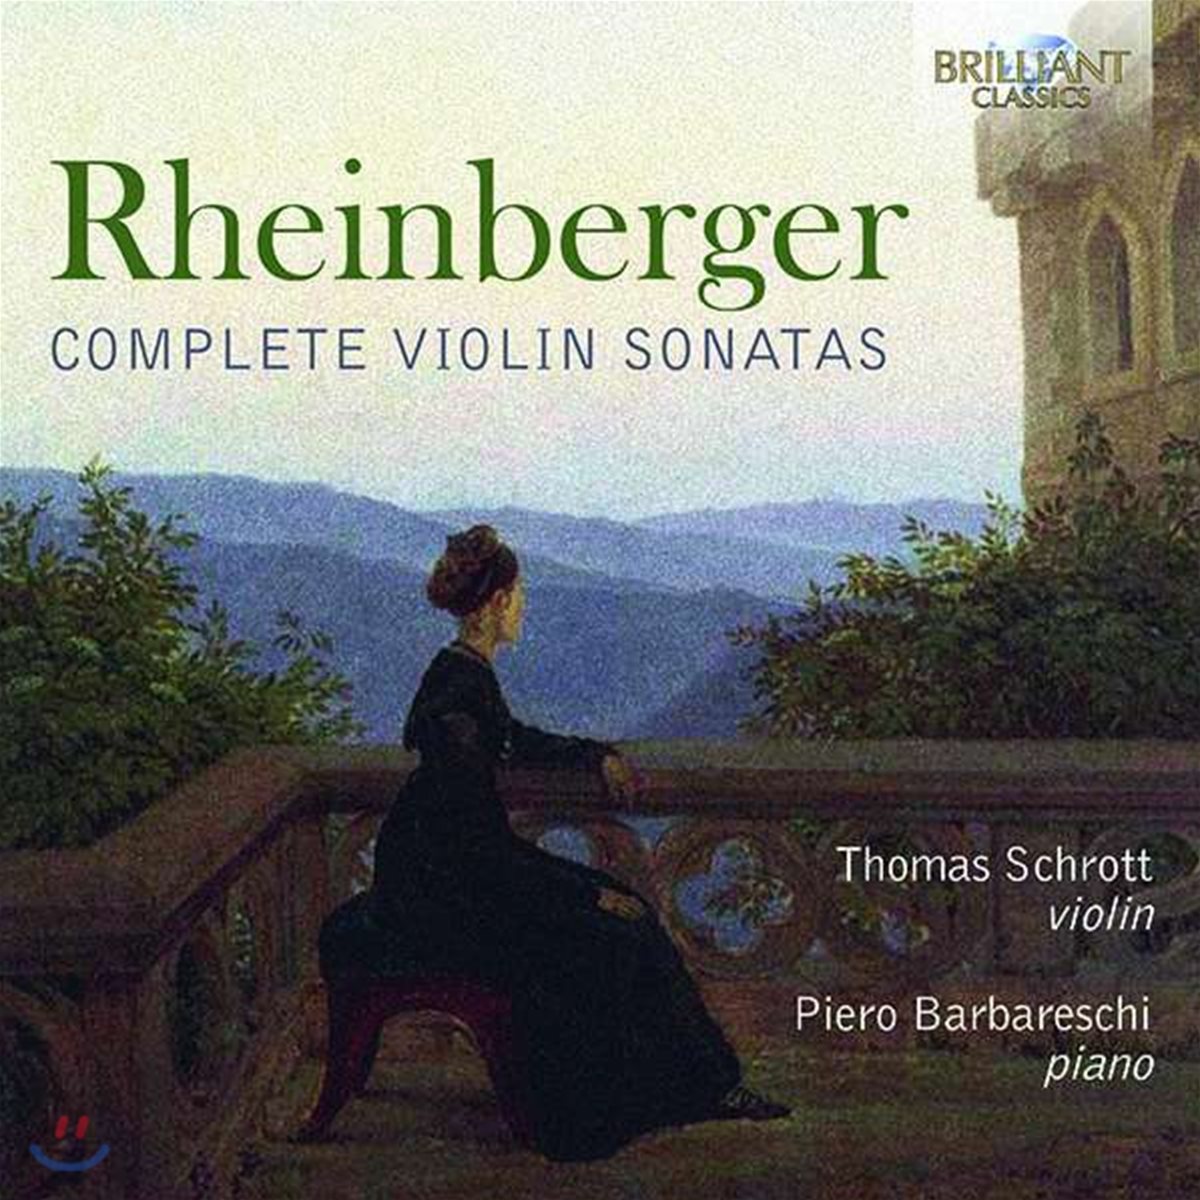 Thomas Schrott / Piero Barbareschi 라인베르거: 바이올린 소나타 전곡집 (Rheinberger: Complete Violin Sonatas)